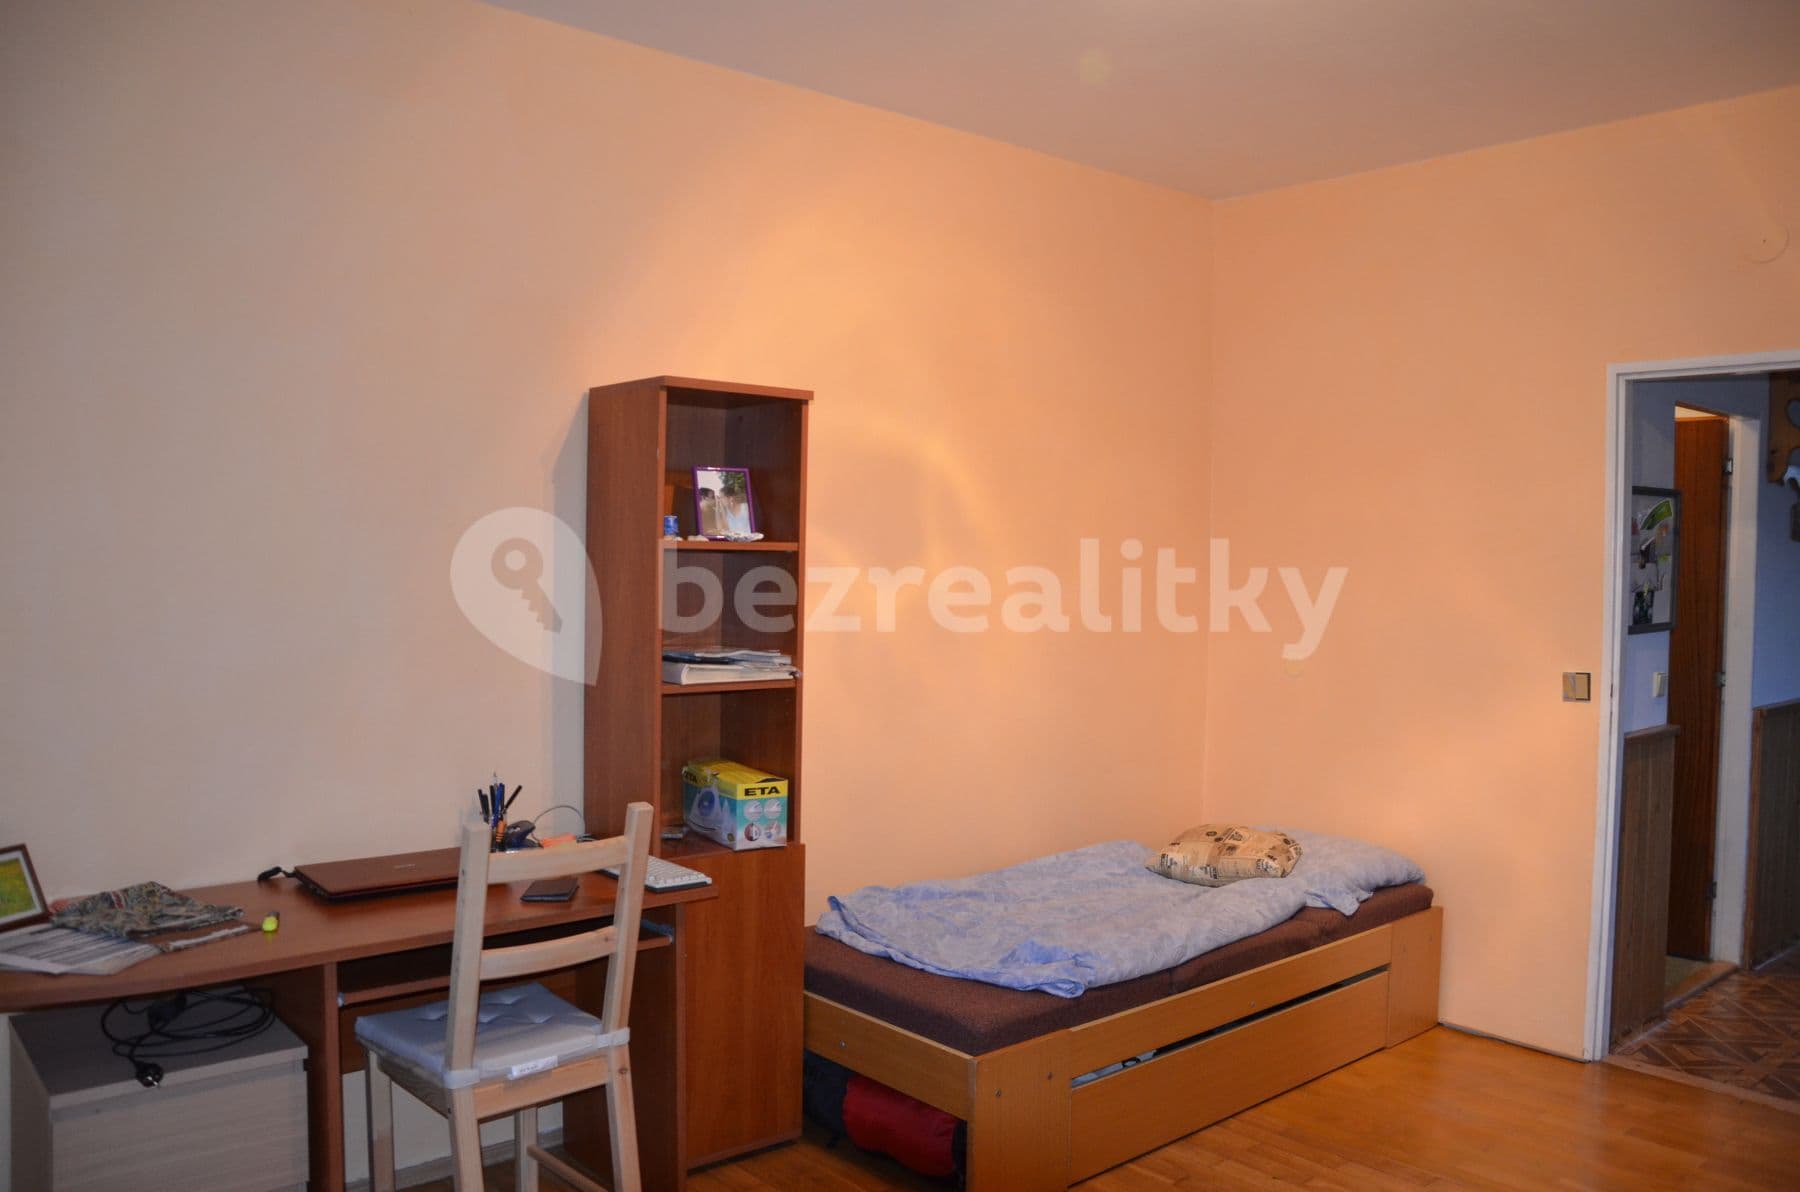 2 bedroom flat to rent, 75 m², K Lesu, Brno, Jihomoravský Region